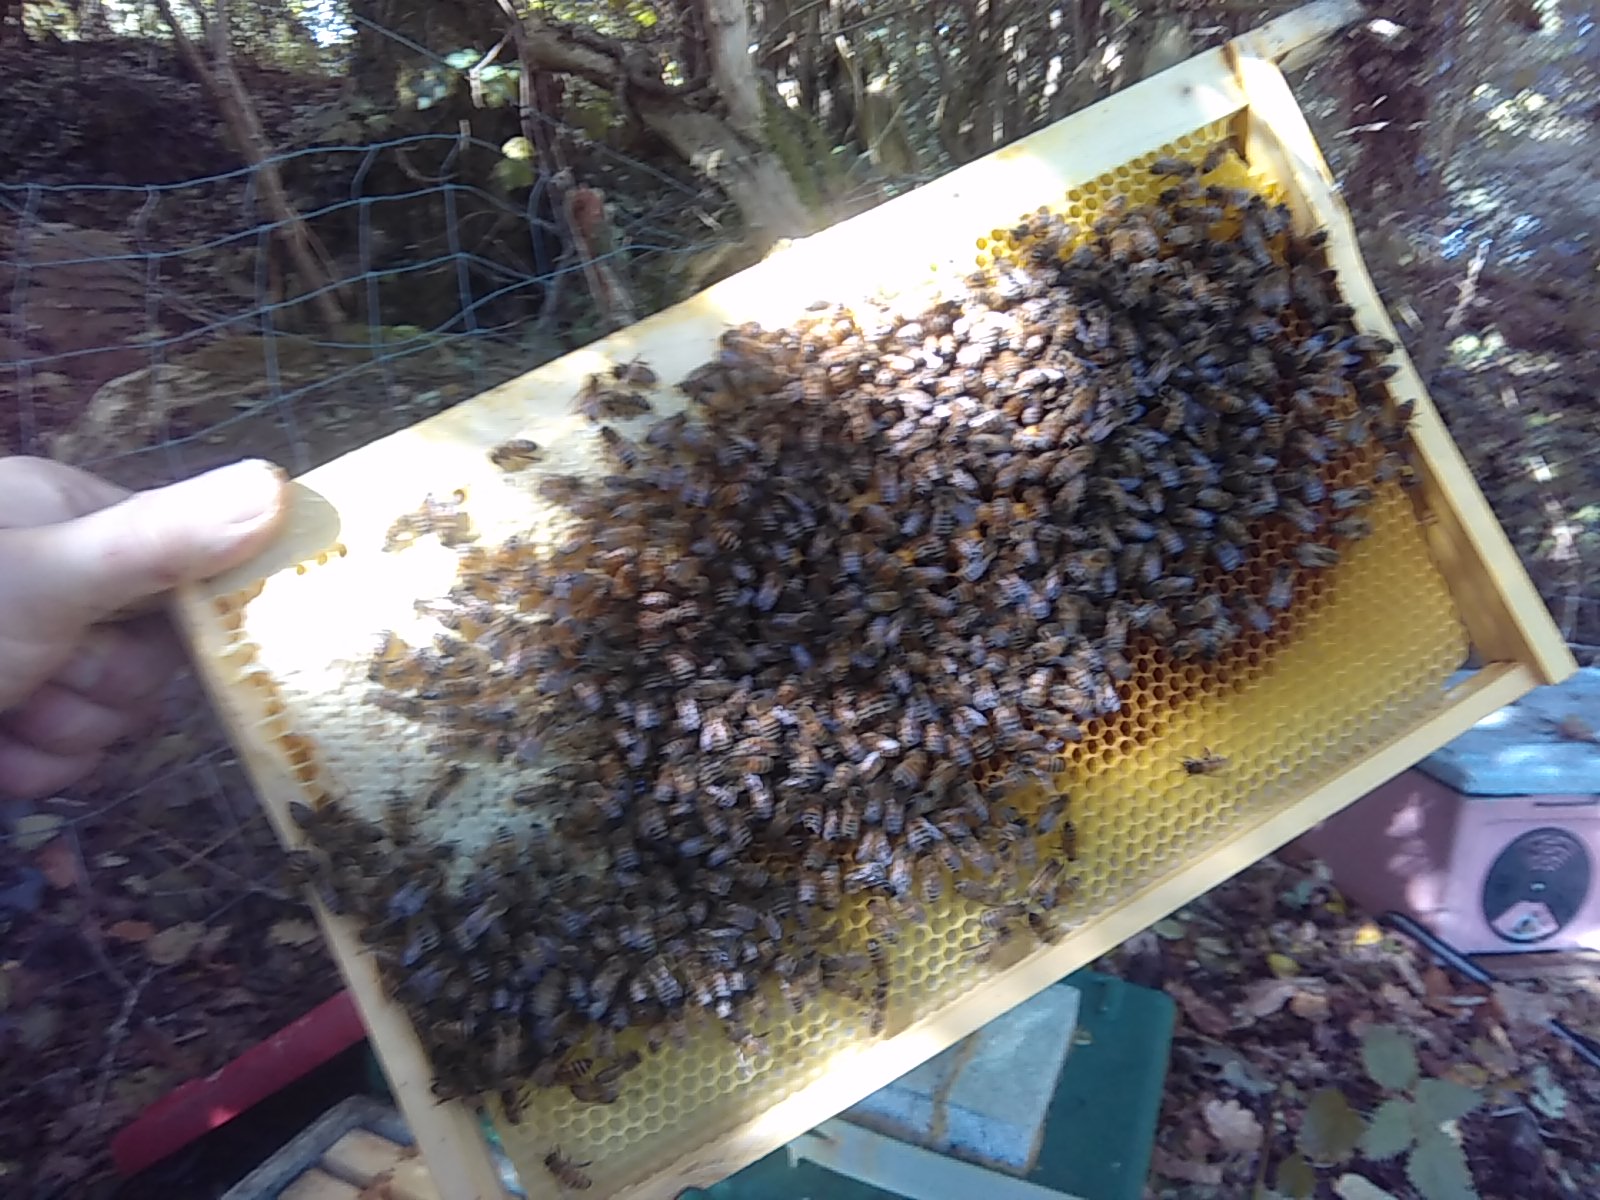 We’ve been preparing our honey bee nucs for winter